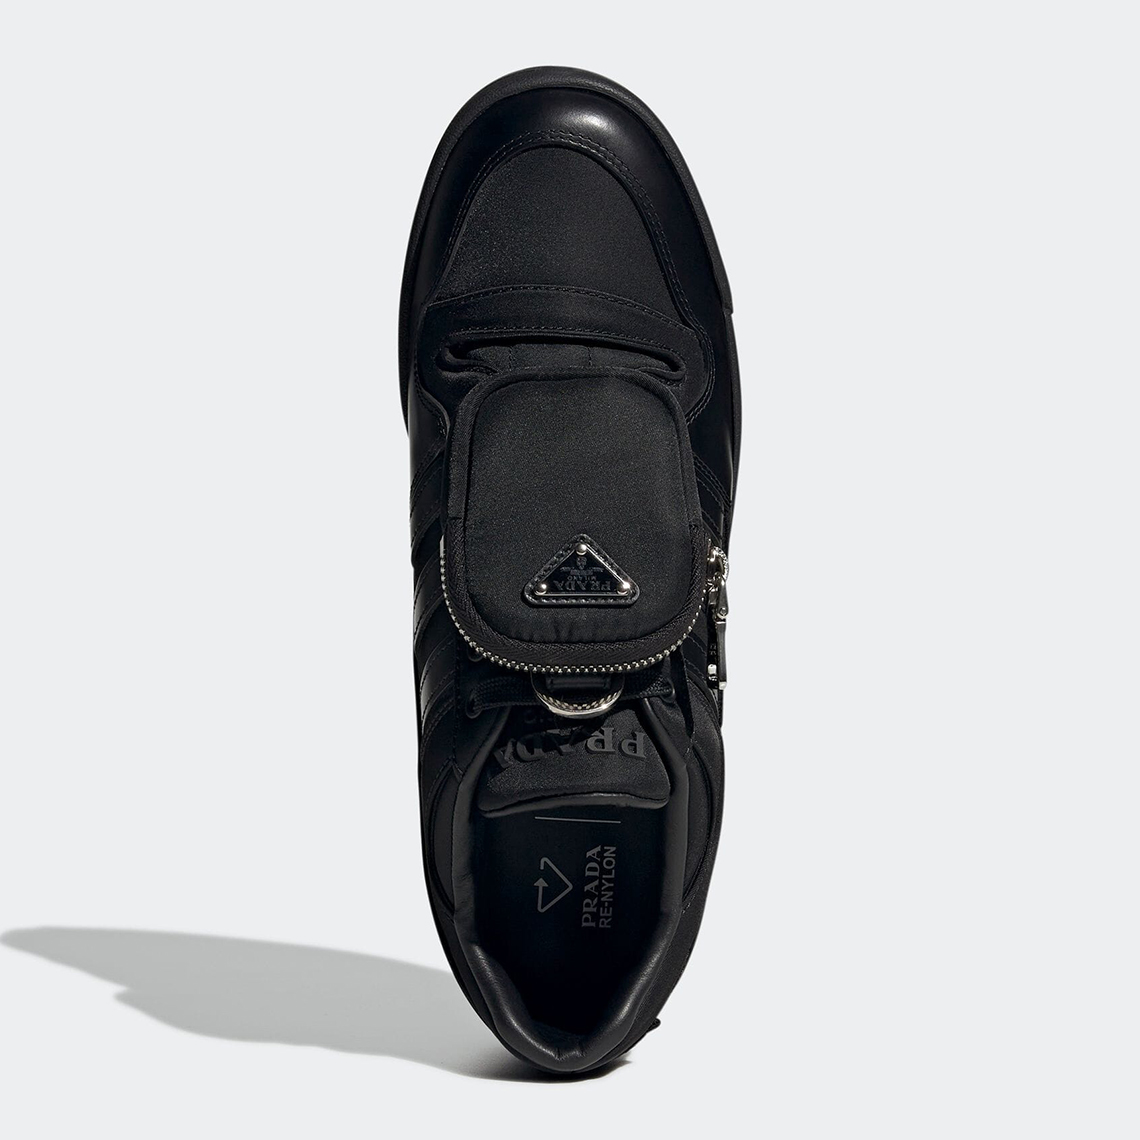 Prada For Adidas Forum Lo Re Nylon Core Black Gy7043 6